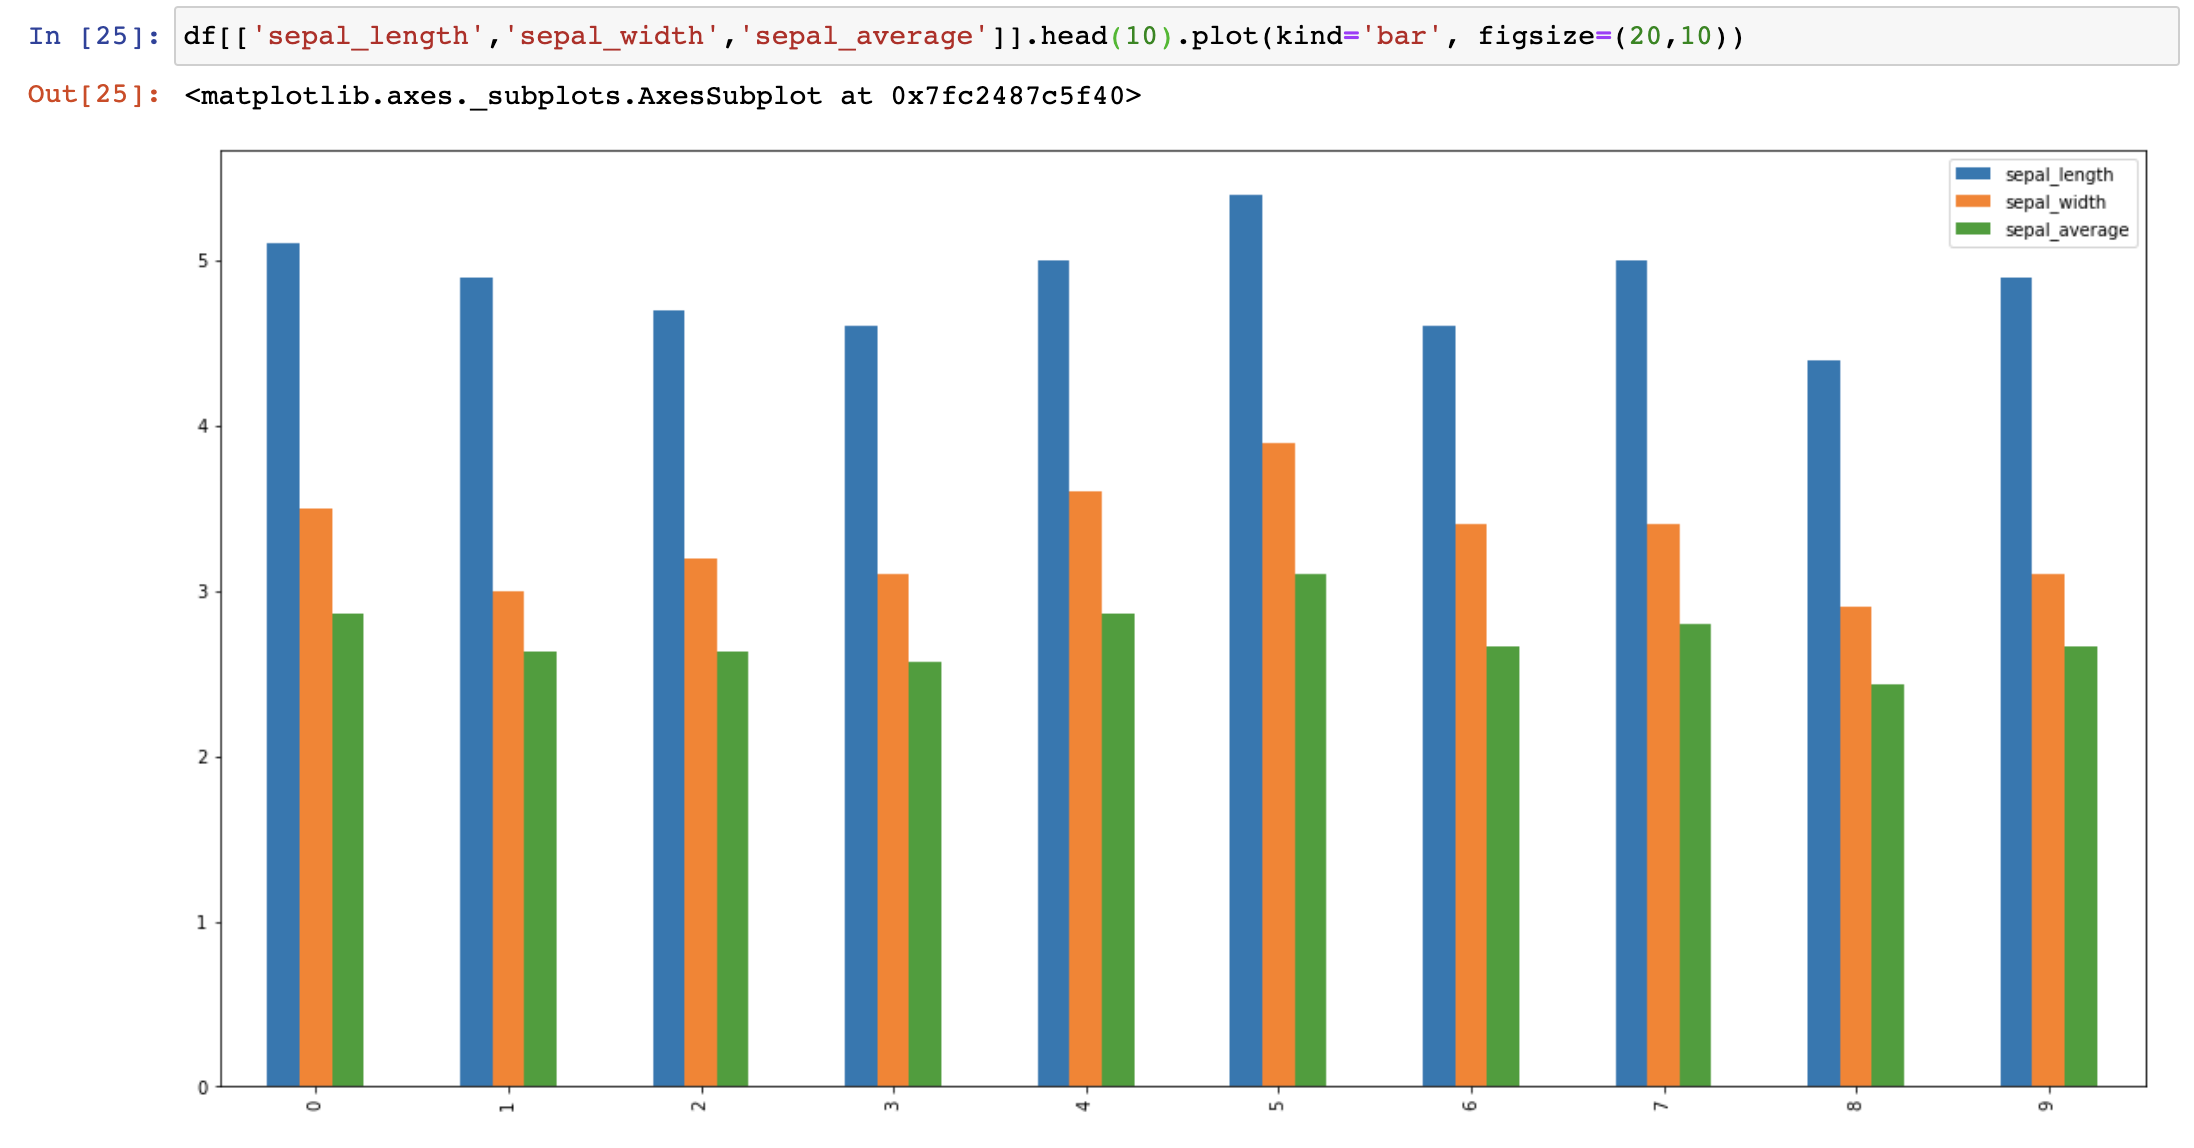 Blue bar: sepal_length, orange bar: sepal_width and green bar: sepal values’ average.